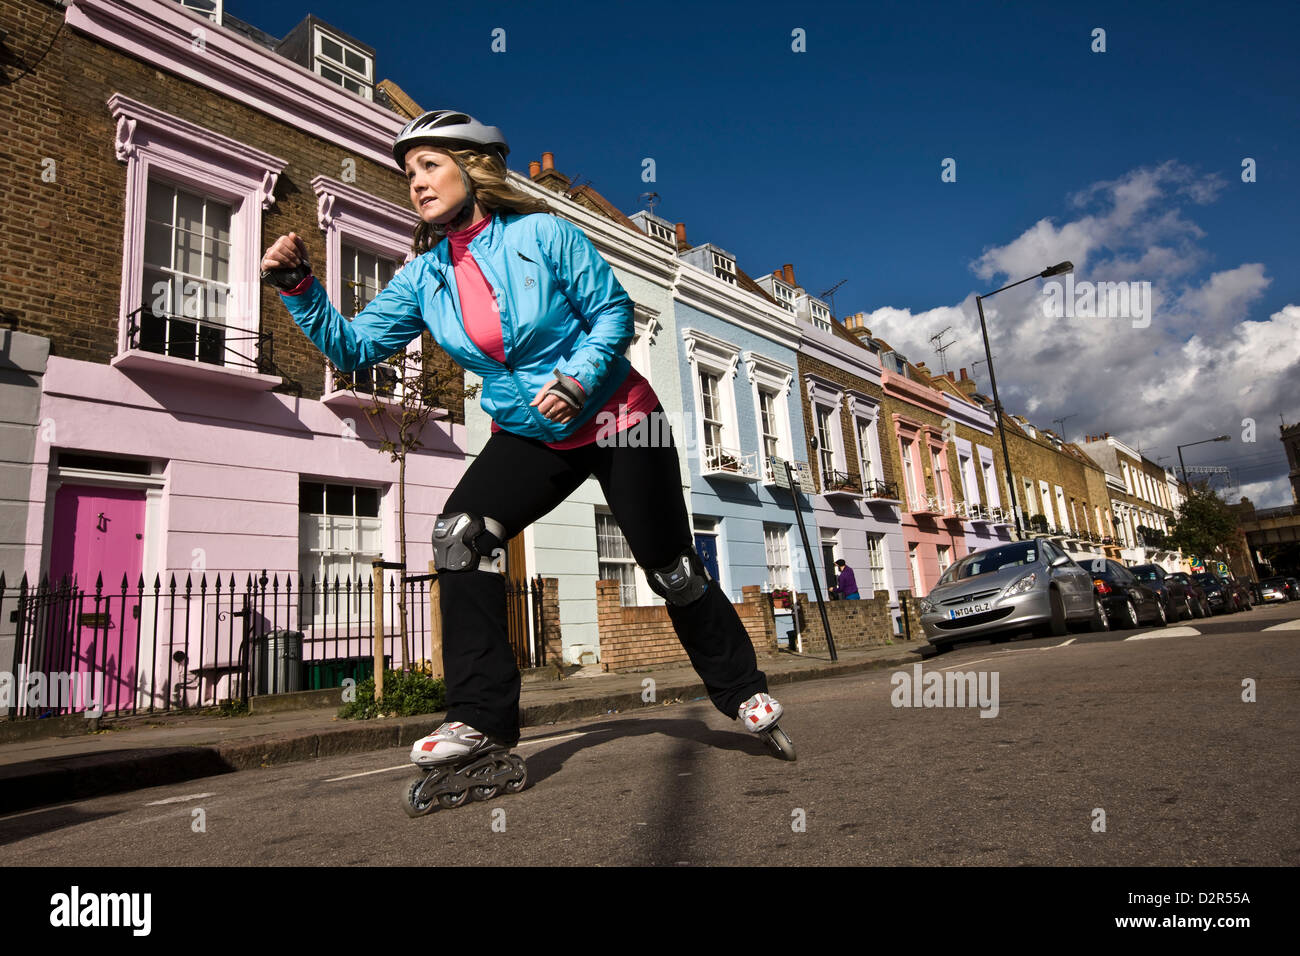 Woman rollerblading in urban street, primrose Hill, London Stock Photo